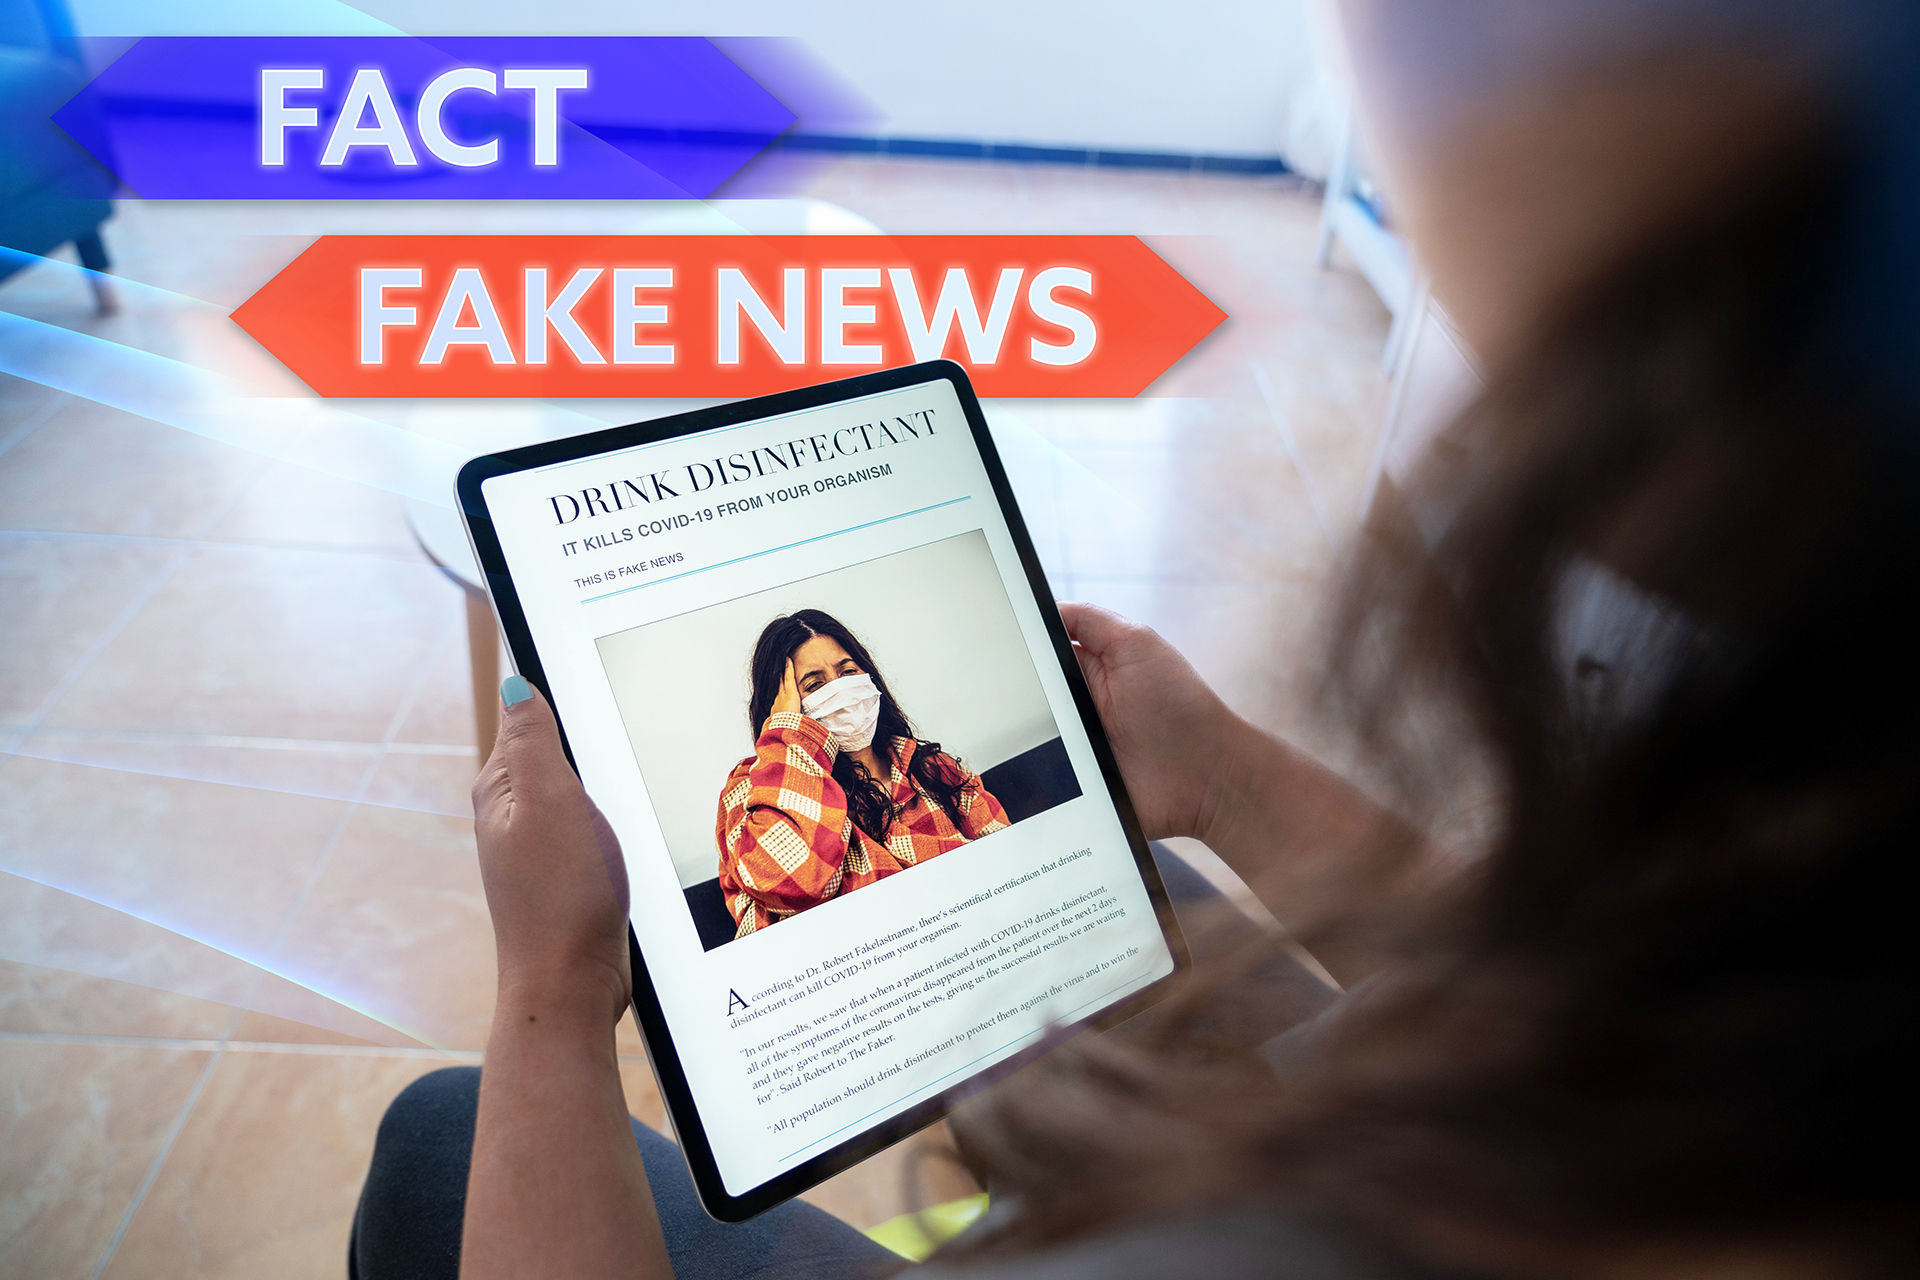 Finding effective ways to debunk misinformation online